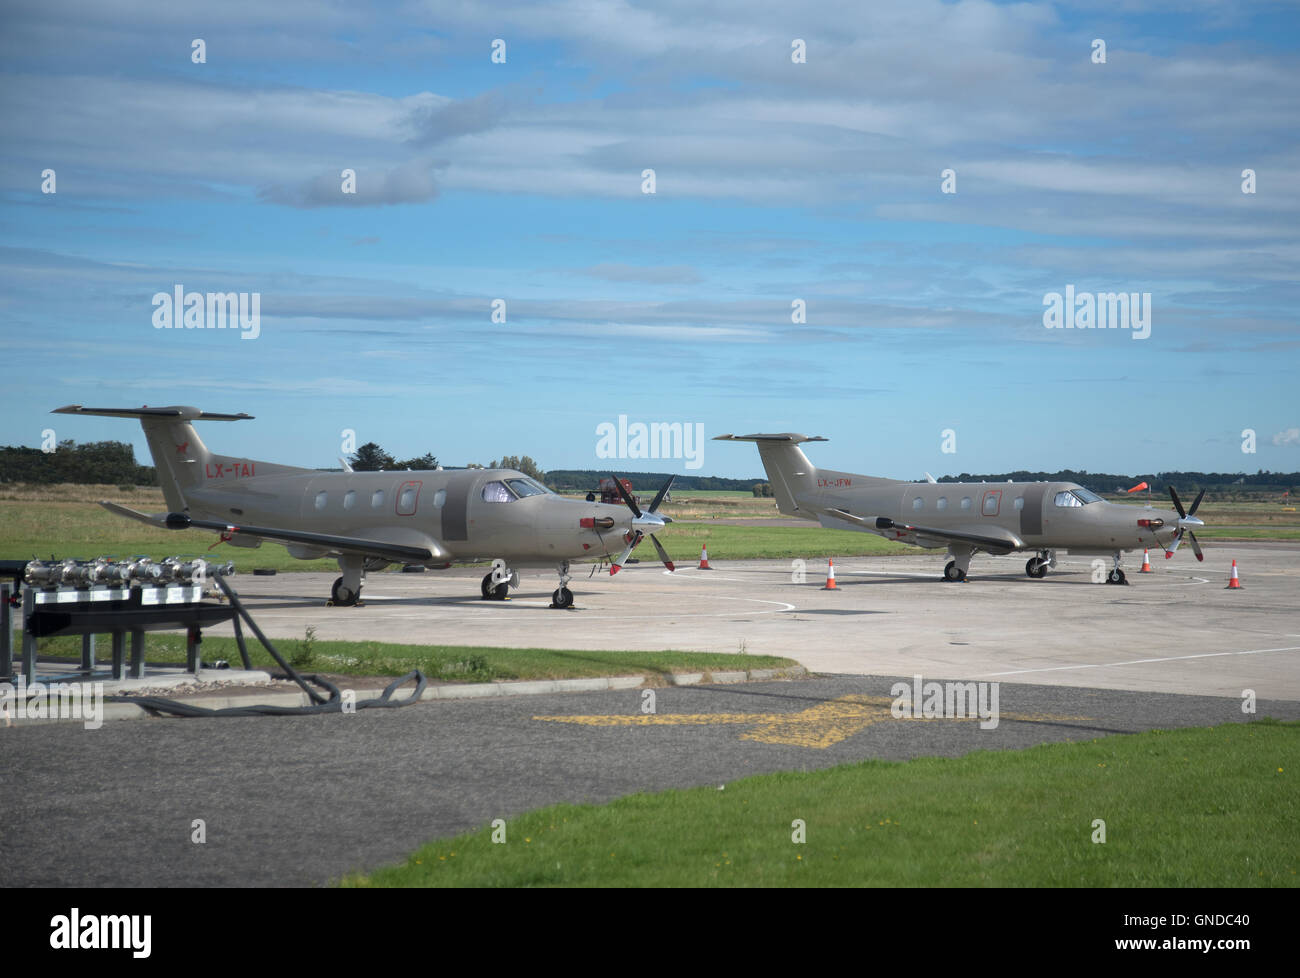 Pilatus PC-12/47E Passenger and cargo aircraft Registrations LX-TAI & LX-JFW  SCO 11,218. Stock Photo